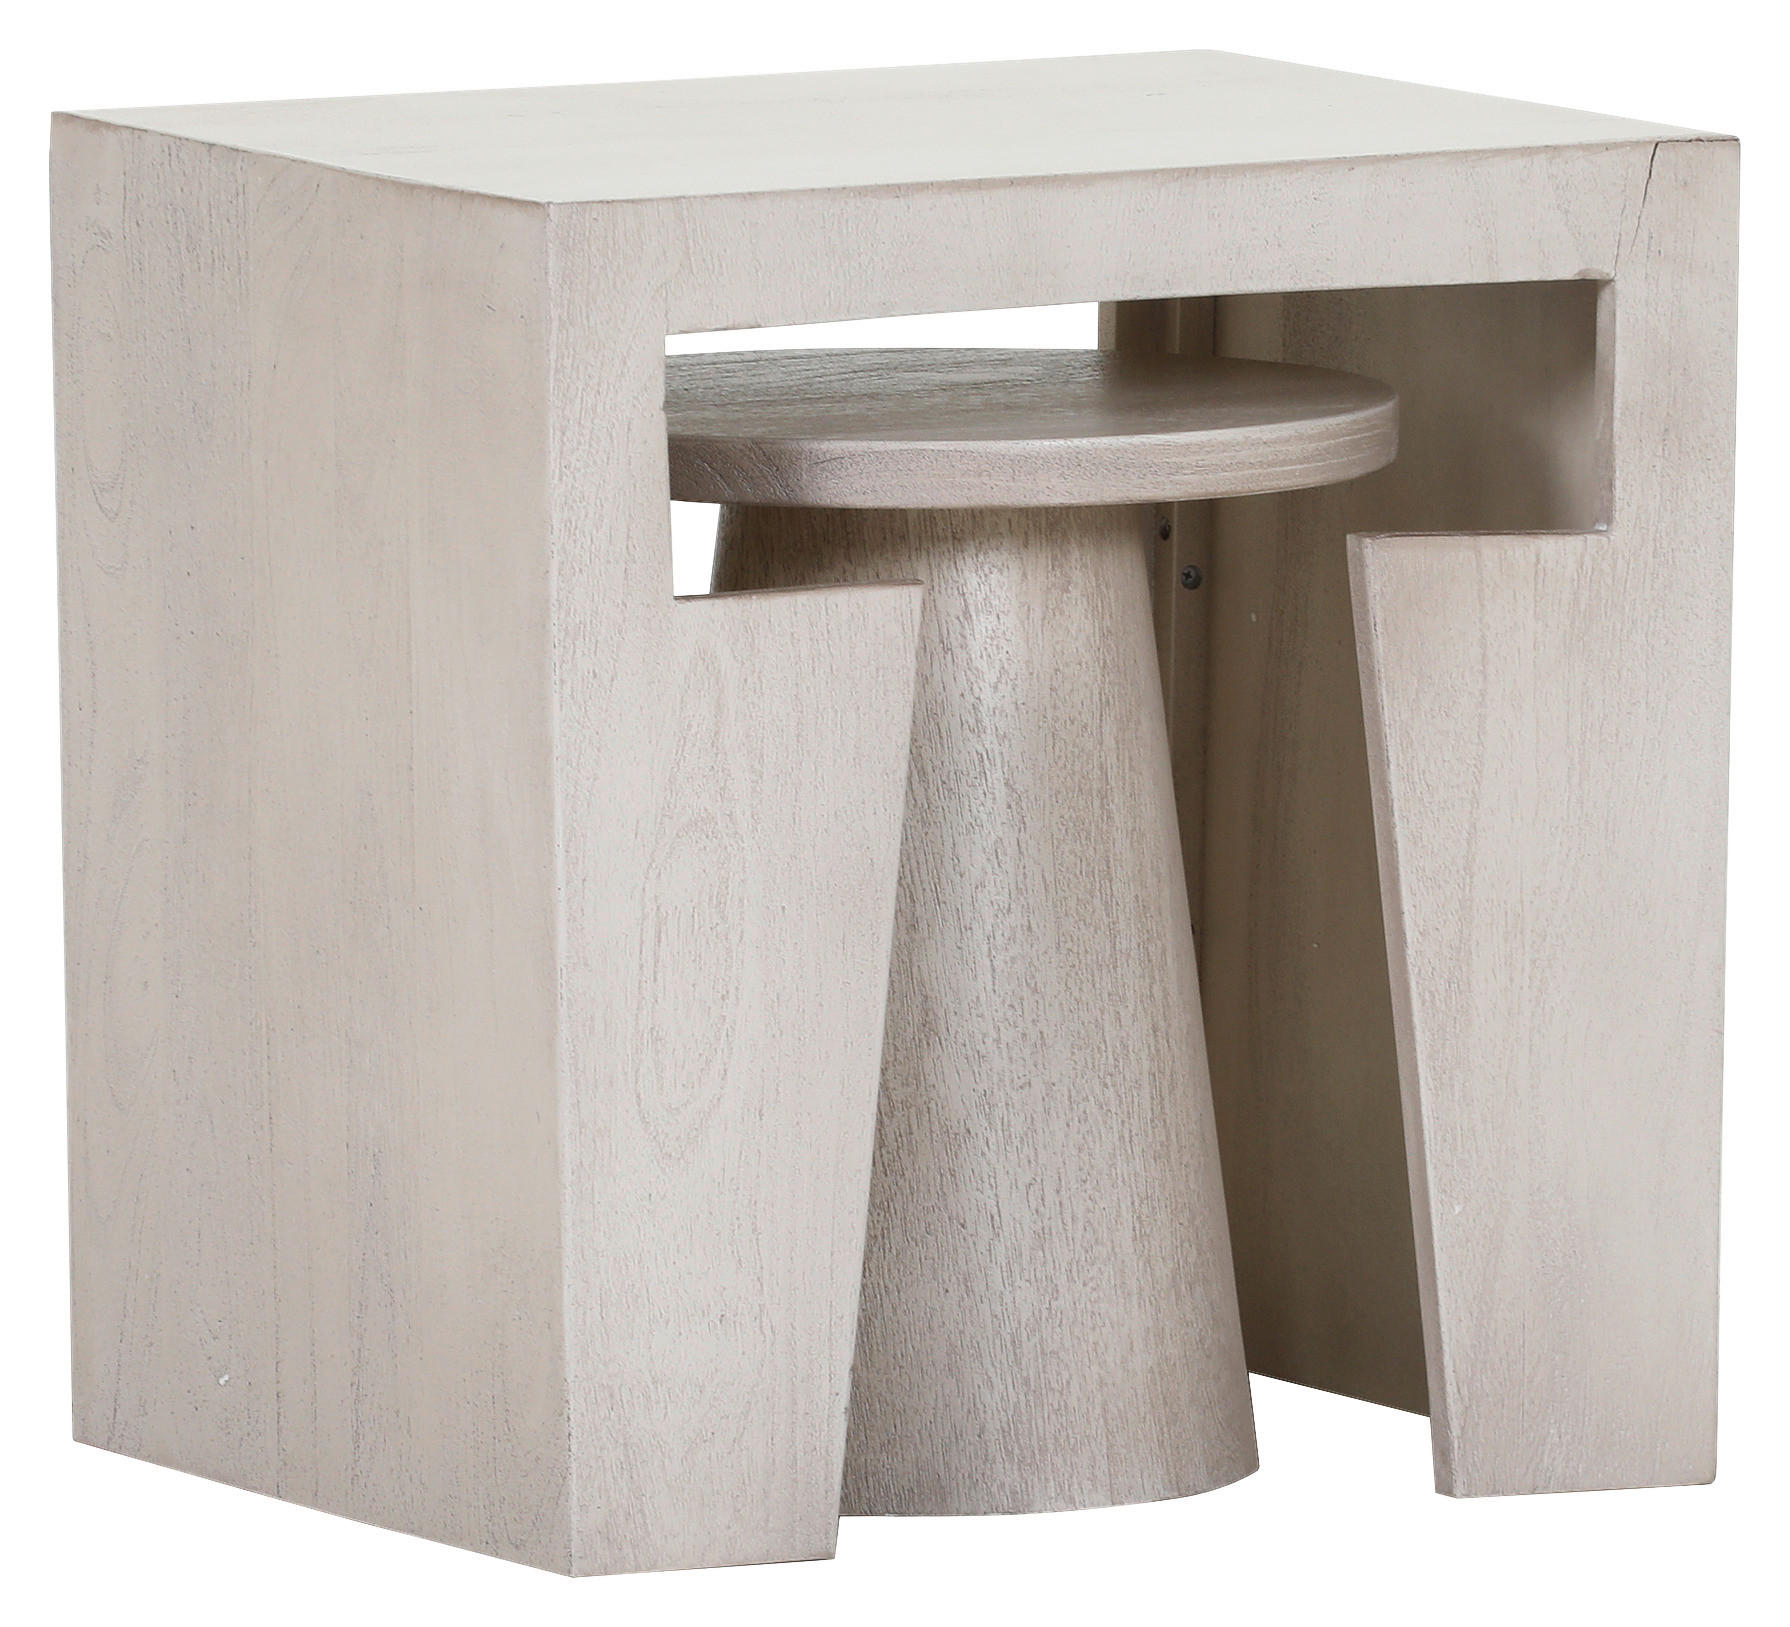 BEISTELLTISCHSET Mangoholz massiv rechteckig Weiß  - Weiß, Design, Holz (50/40/50cm) - Carryhome